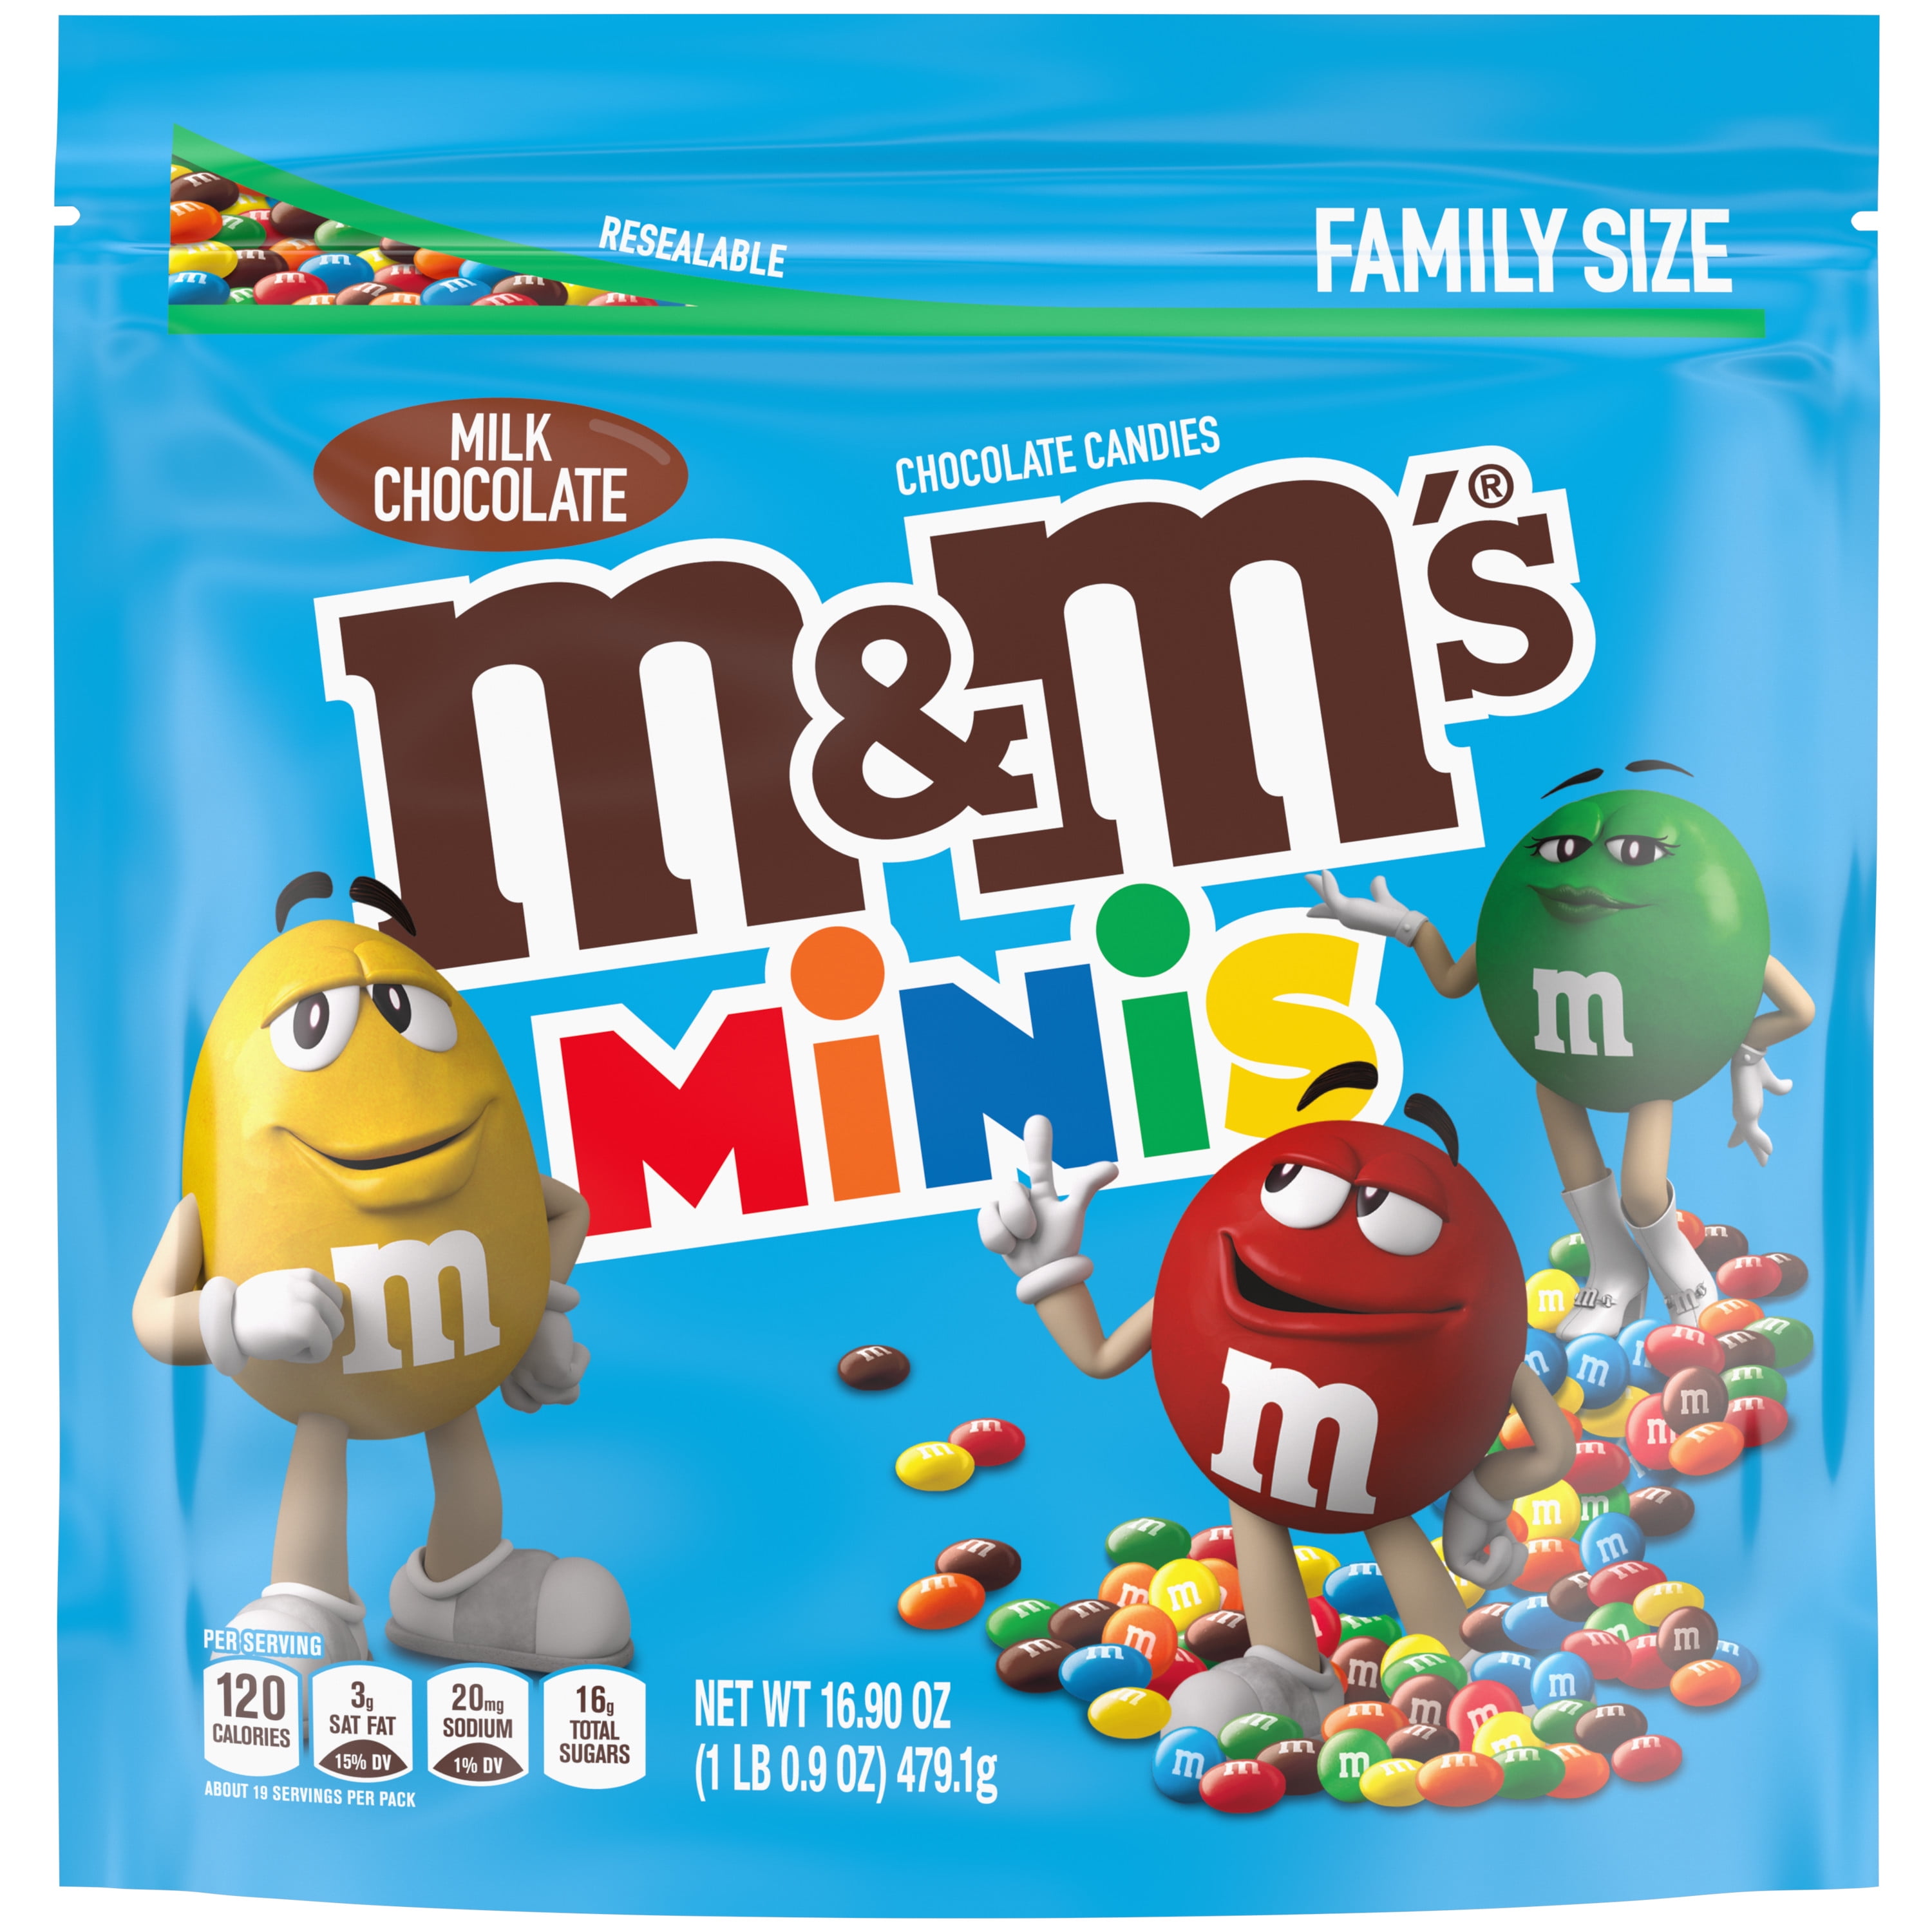 Mini M&M'S, 9.4oz